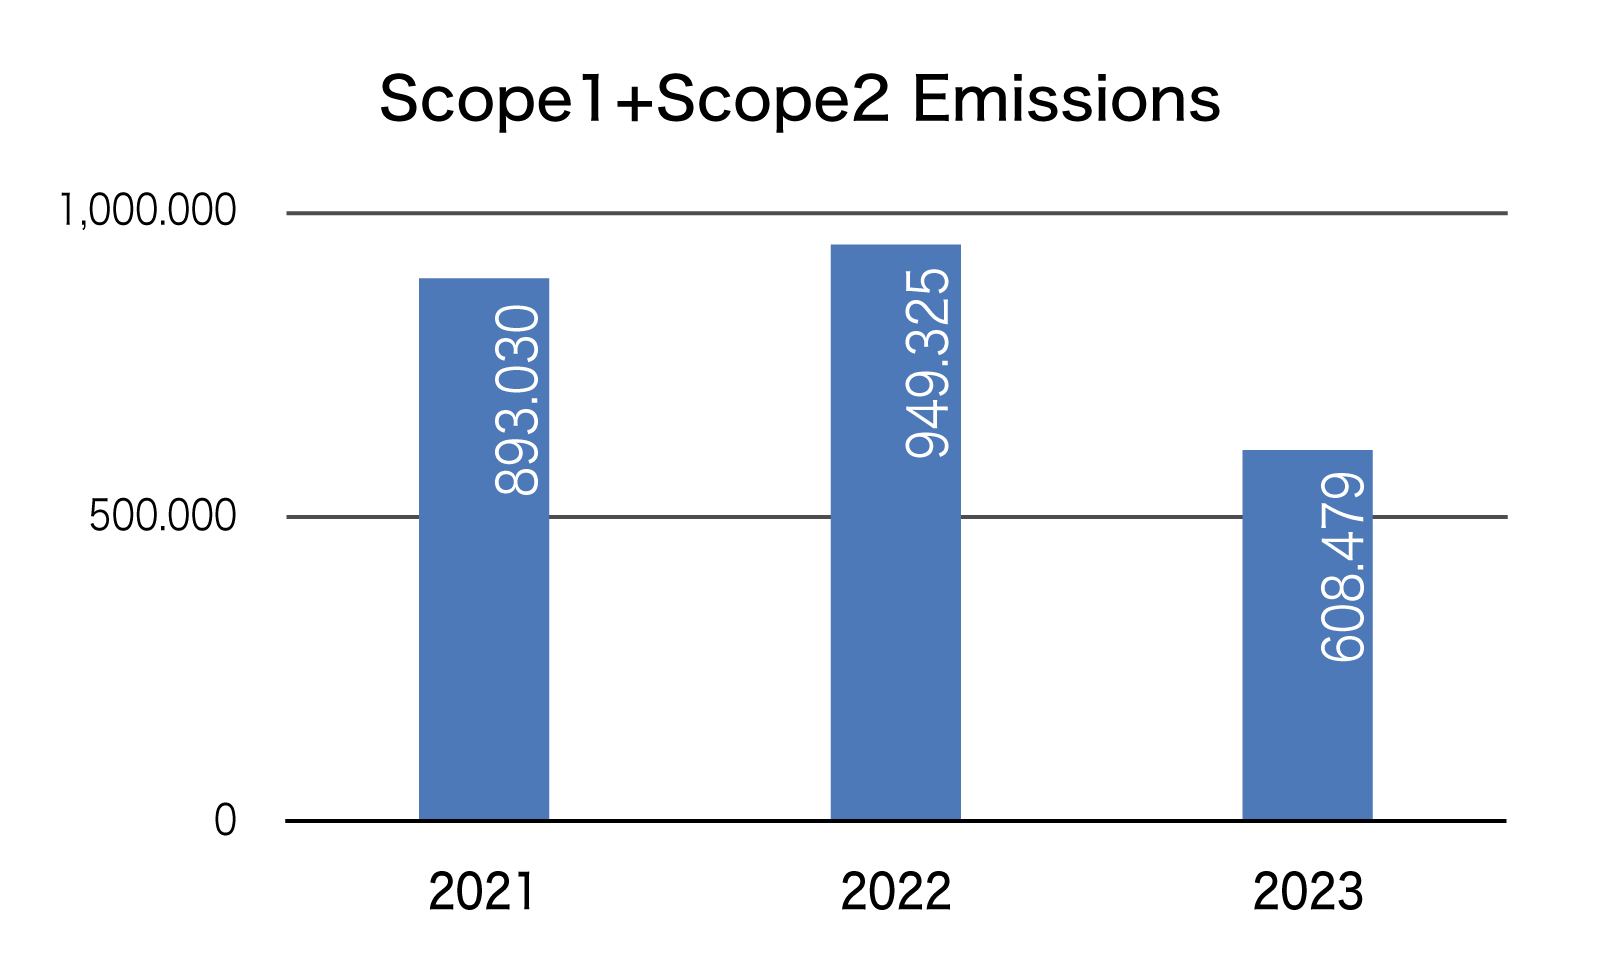 Scope1+Scope2 emissions